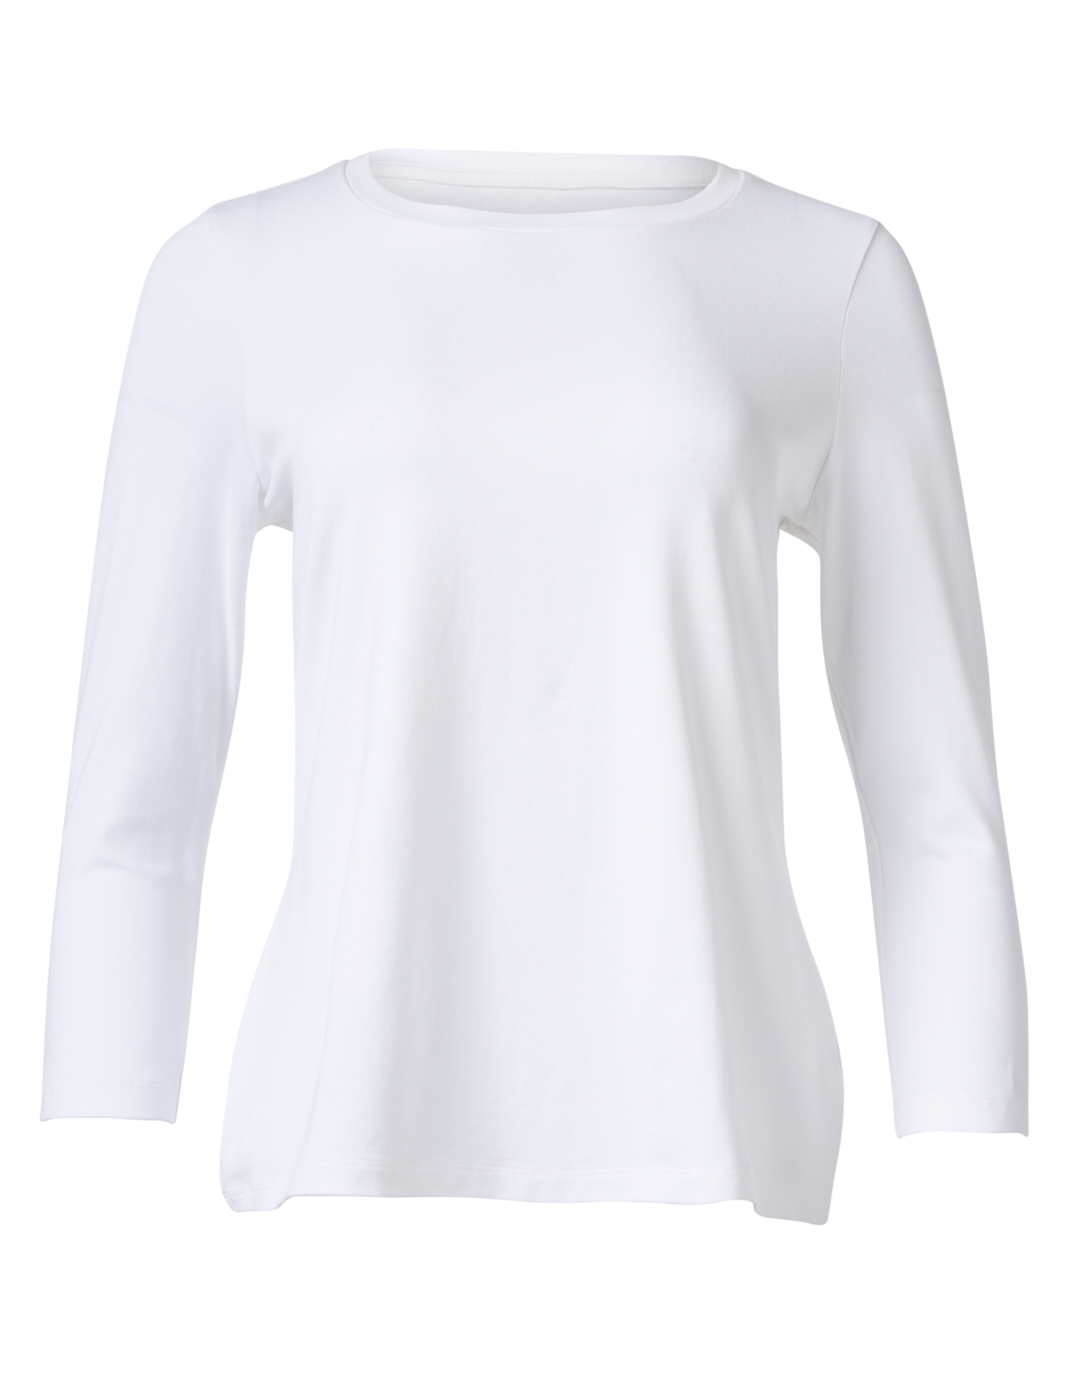 Premium quality pima cotton t-shirts and sweatshirts for women